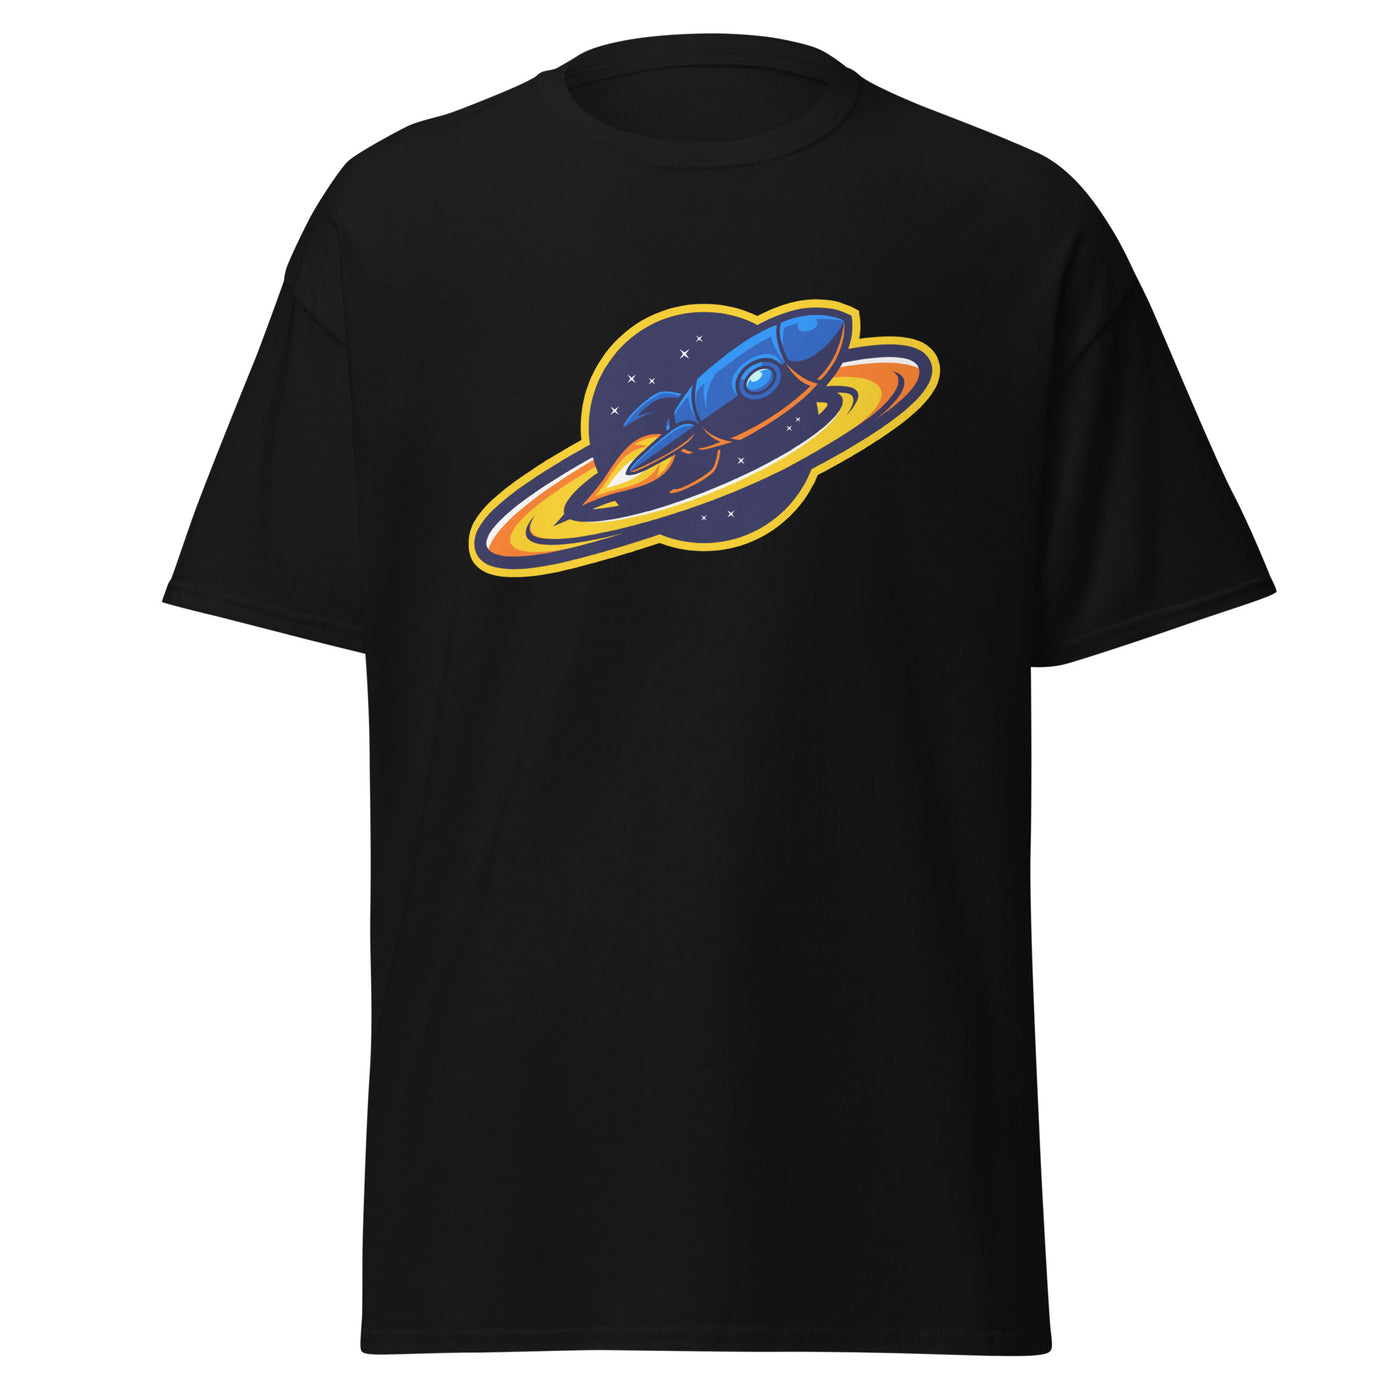 Rocket City Rage Unisex T-Shirt